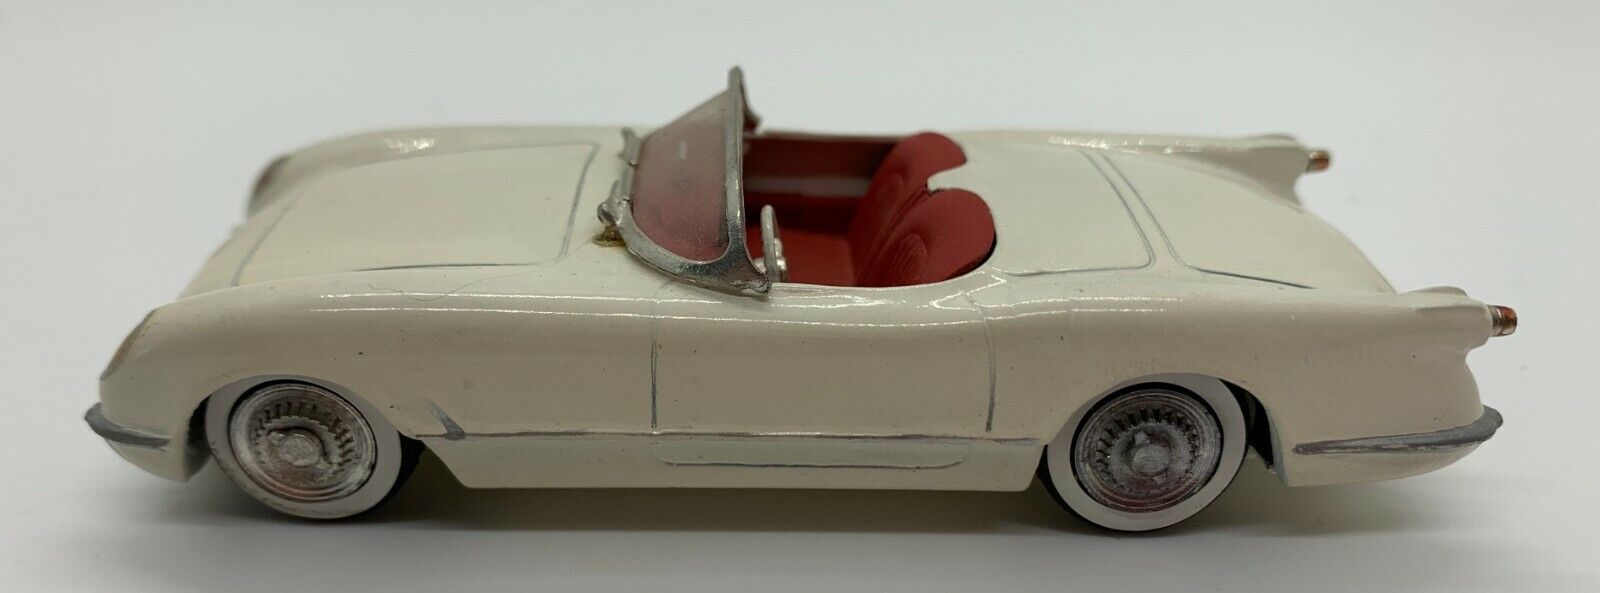 Precision Miniatures #110 1/43 1953-54 Chevrolet Corvette Conv. Cream/Red USA